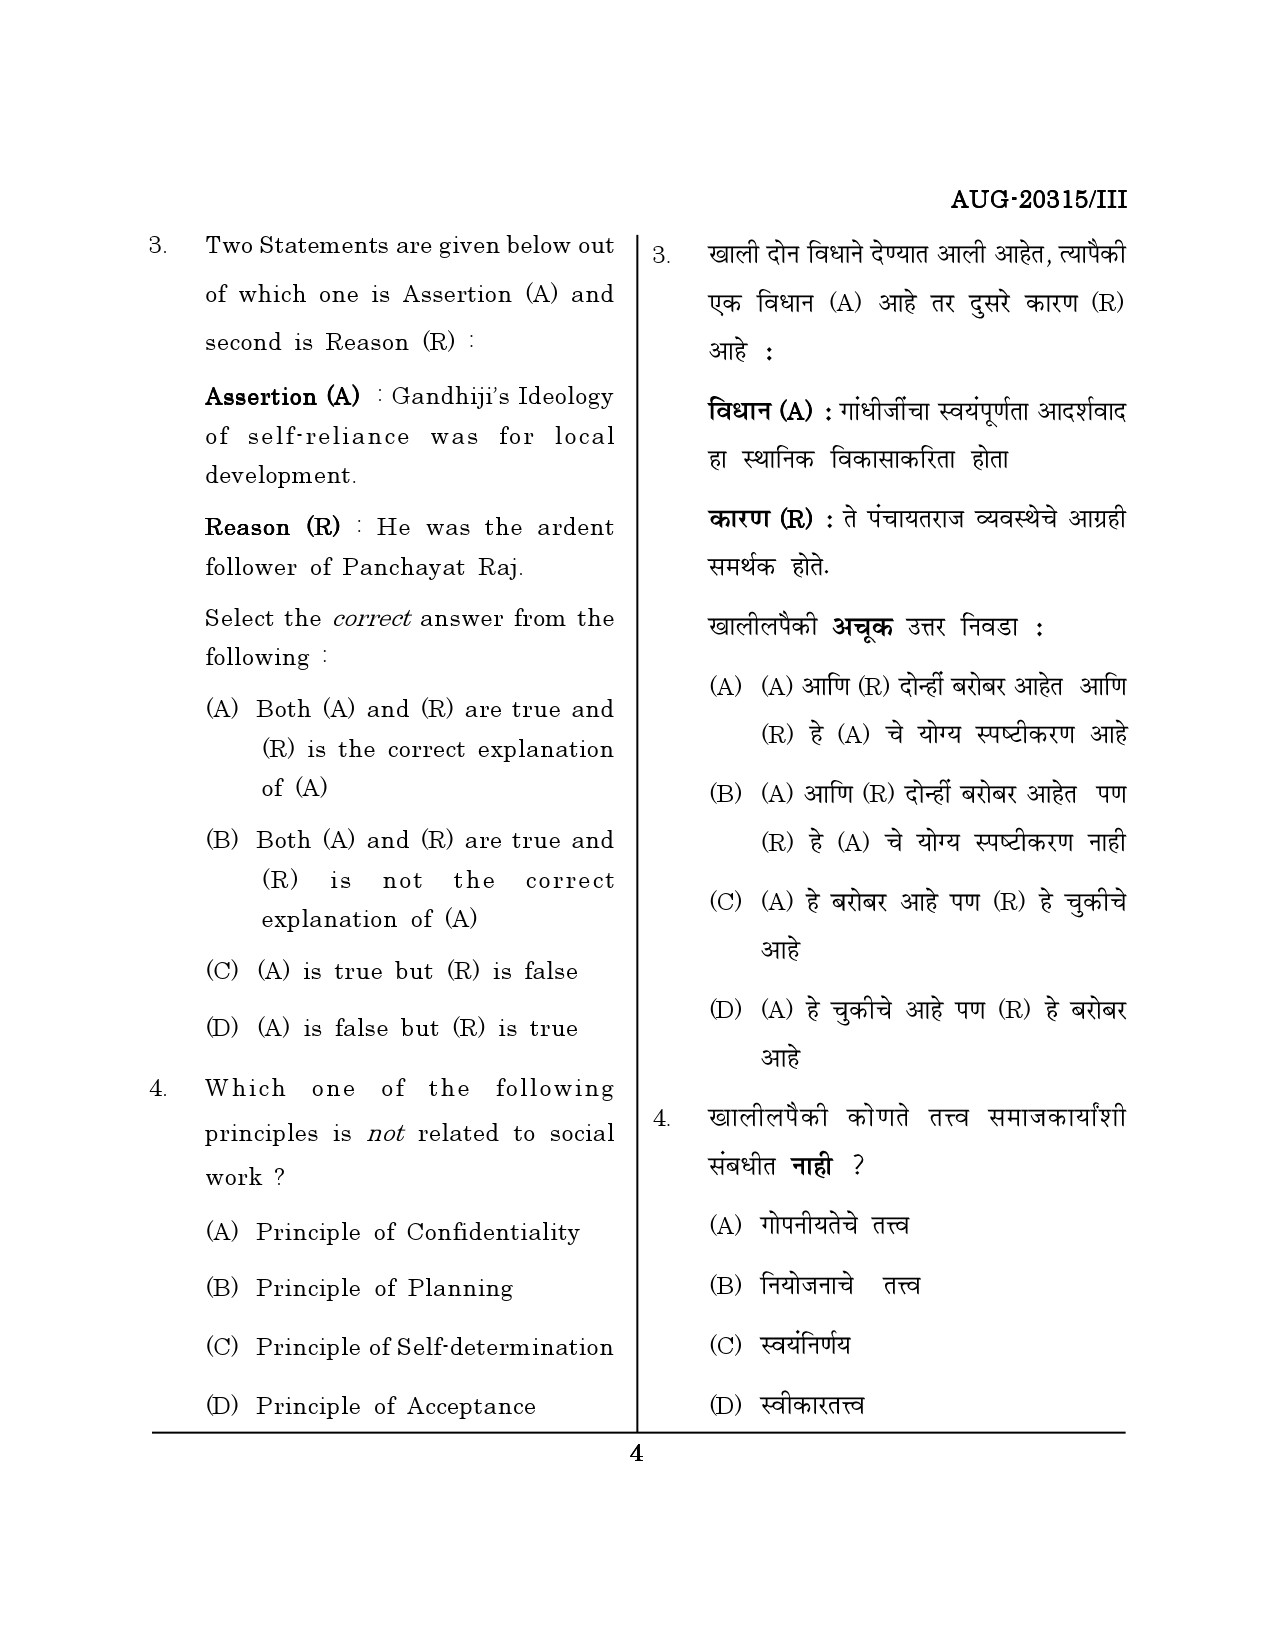 Maharashtra SET Social Work Question Paper III August 2015 3